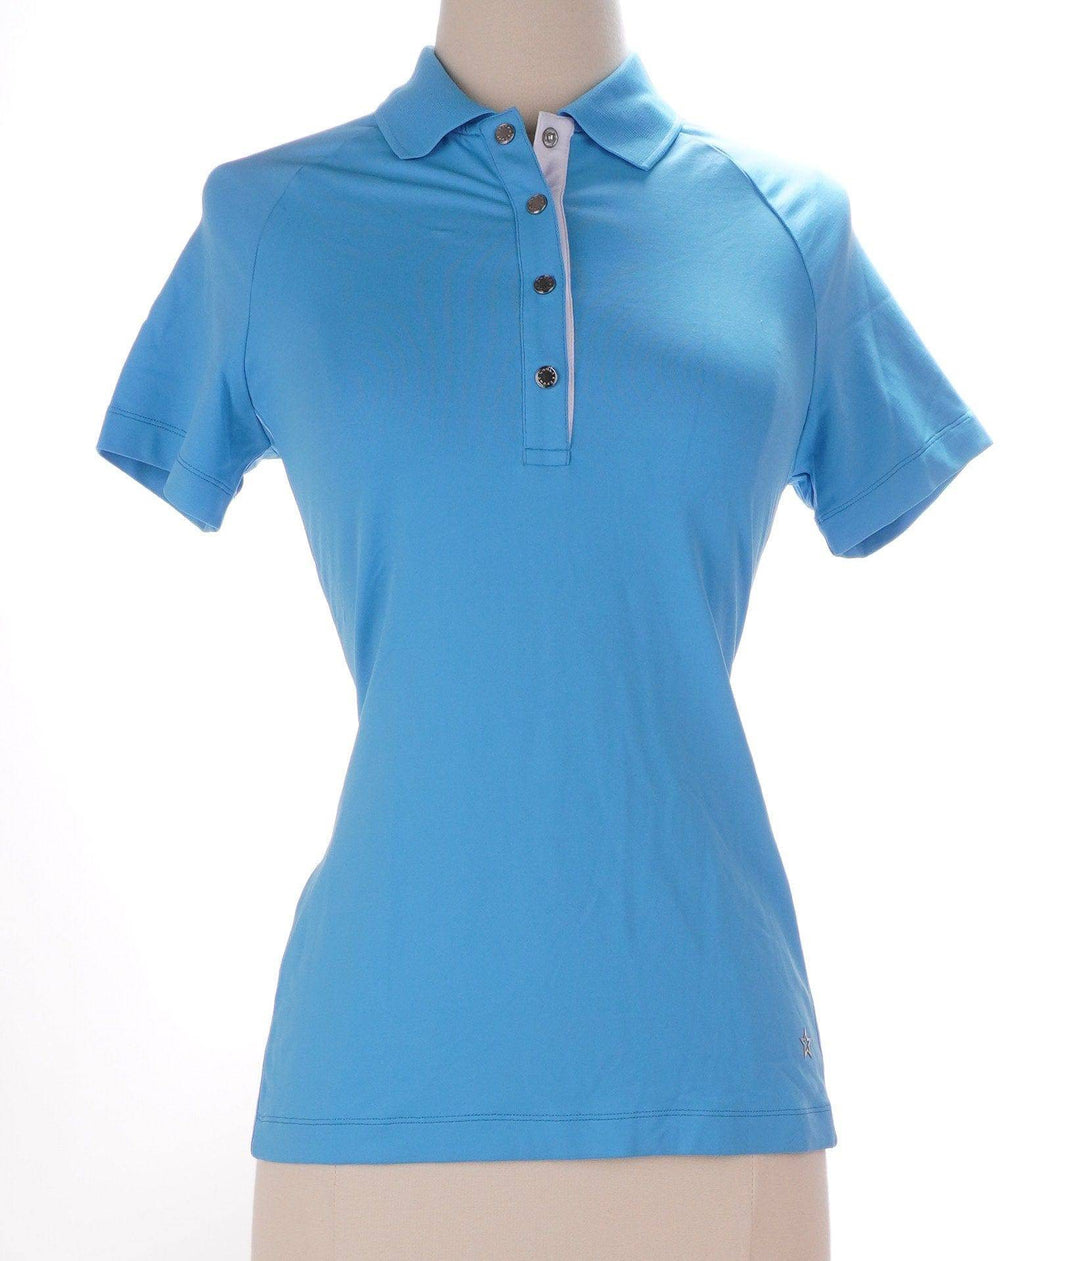 Lohla LT BL / LIGHT BLUE / Small Lohla Short Sleeve Snappy Polo - Size Small